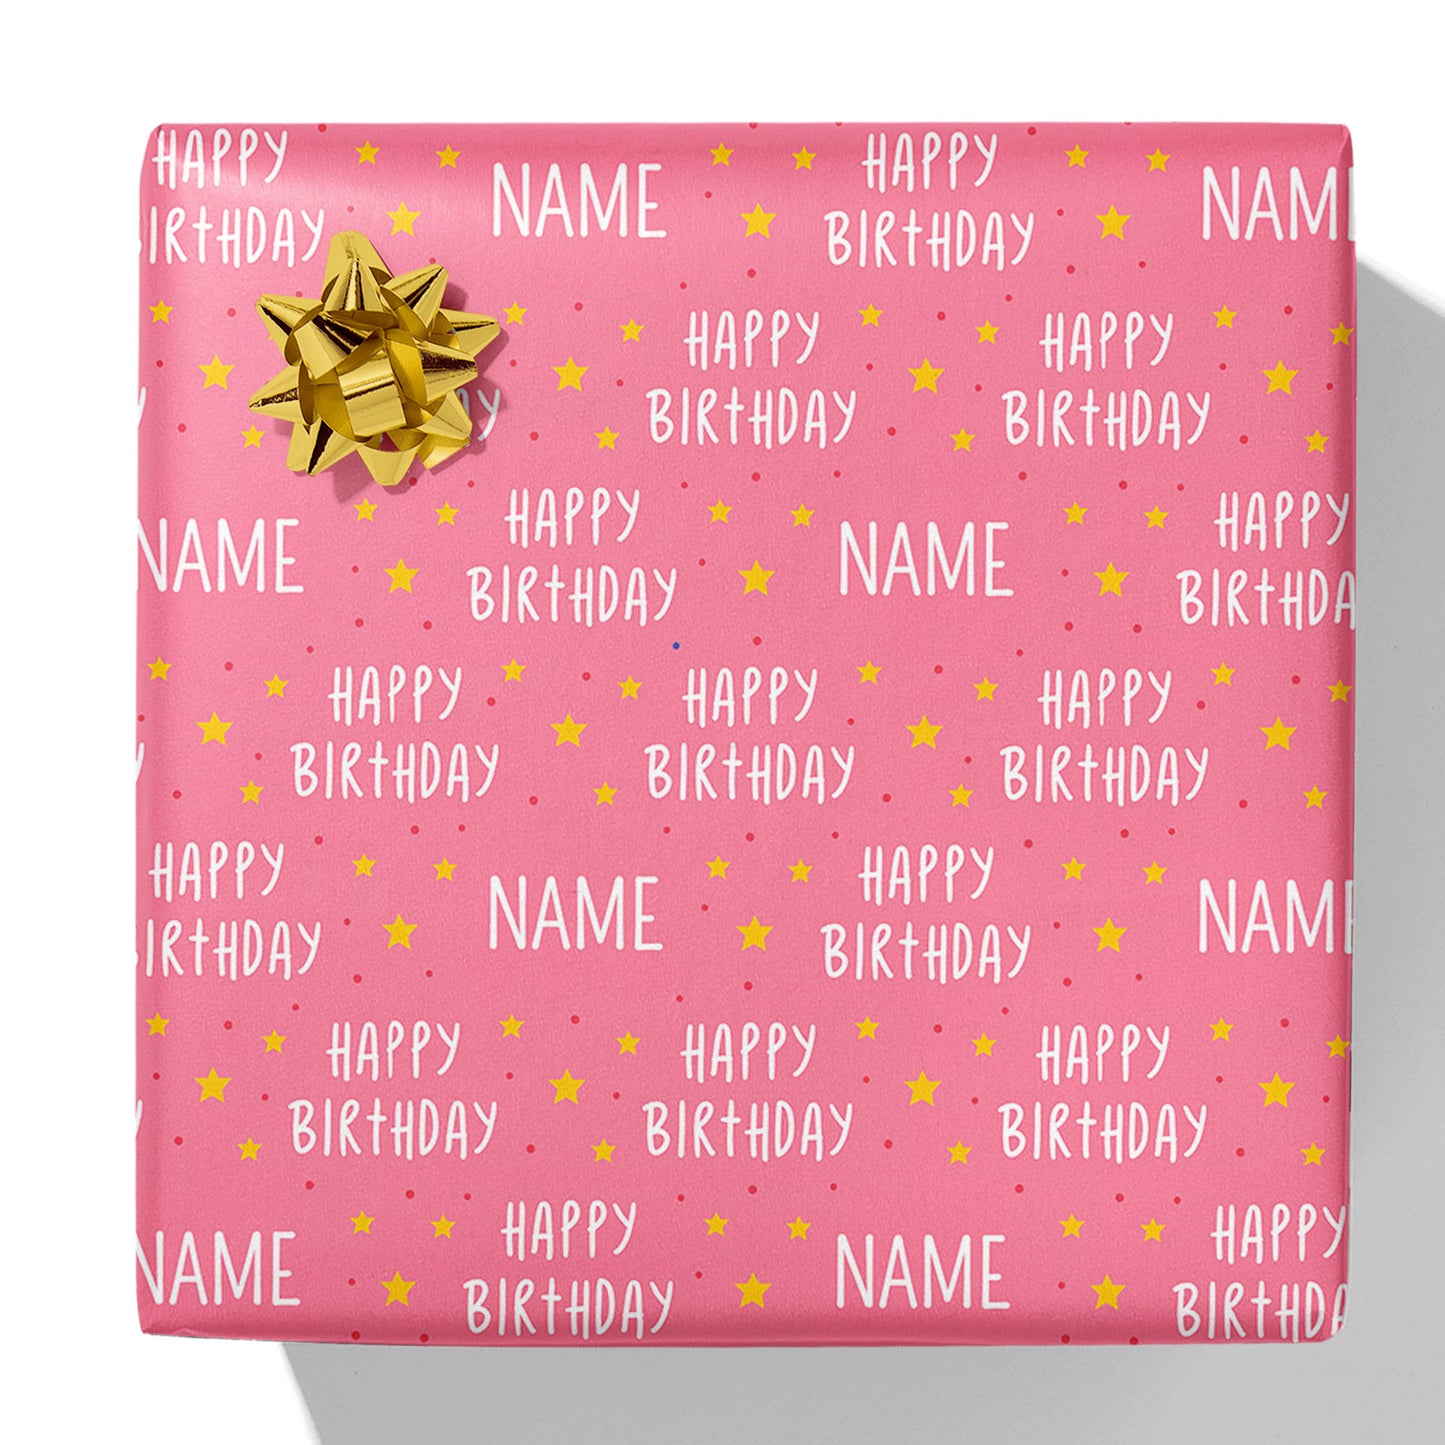 Happy Birthday Name Gift Wrap